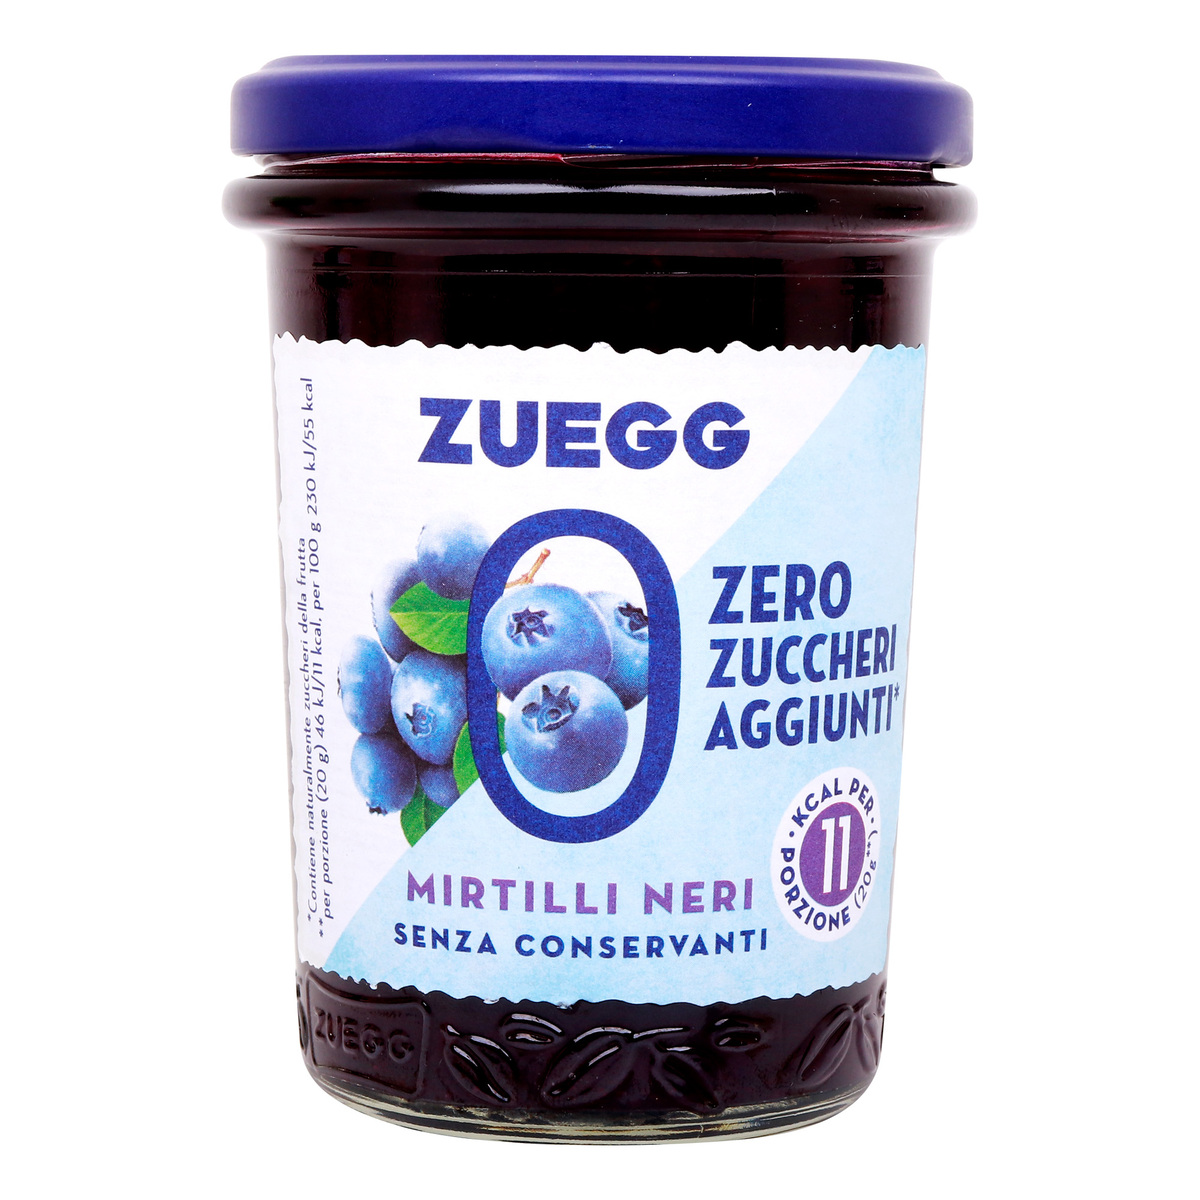 Zuegg Blueberry Jam, No Sugar Added, 220 g